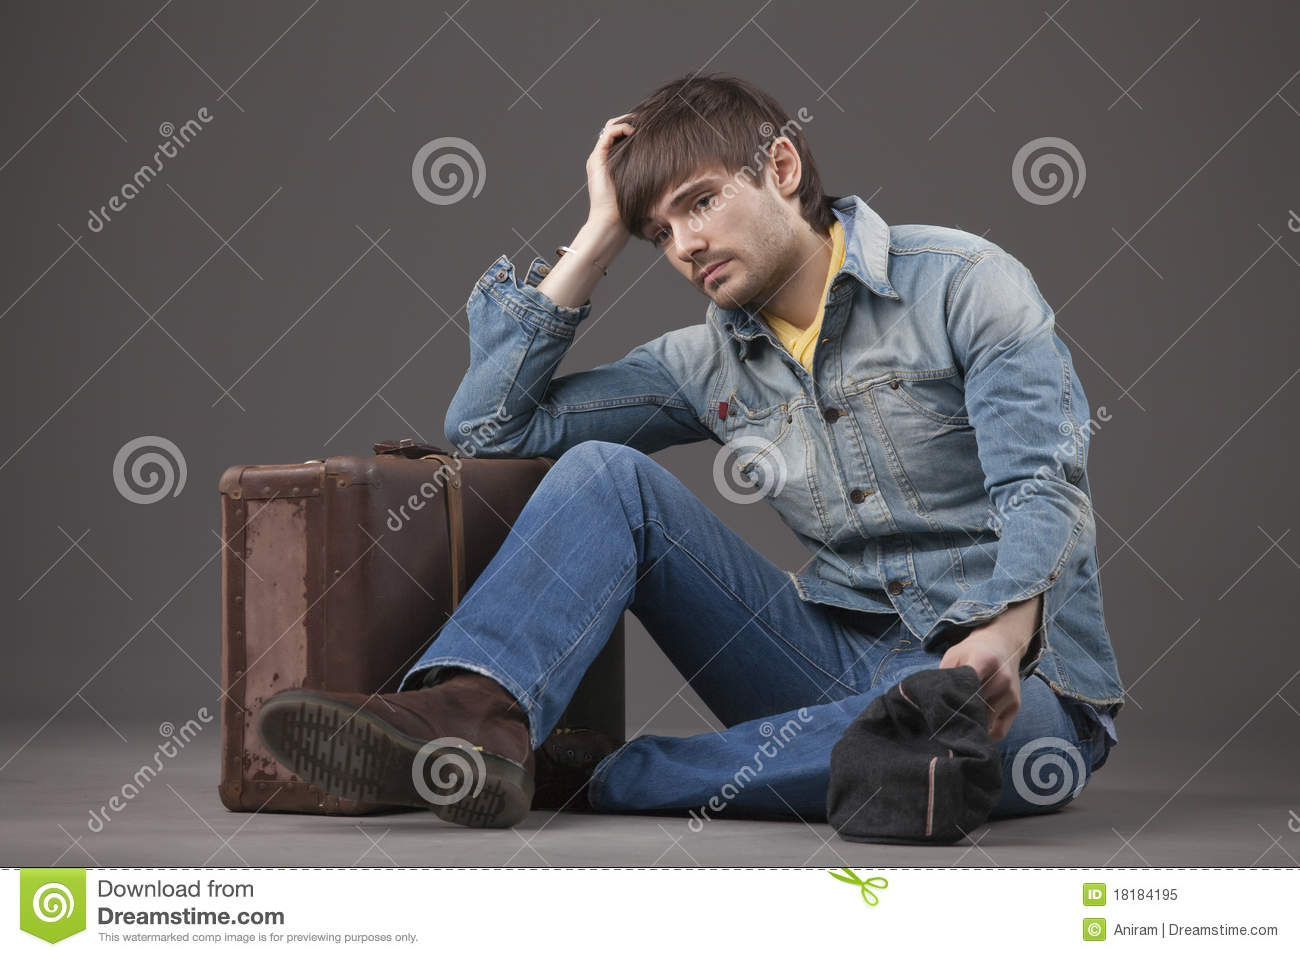 Sad Man With Suitcase Royalty Free Stock Photo   Image  18184195